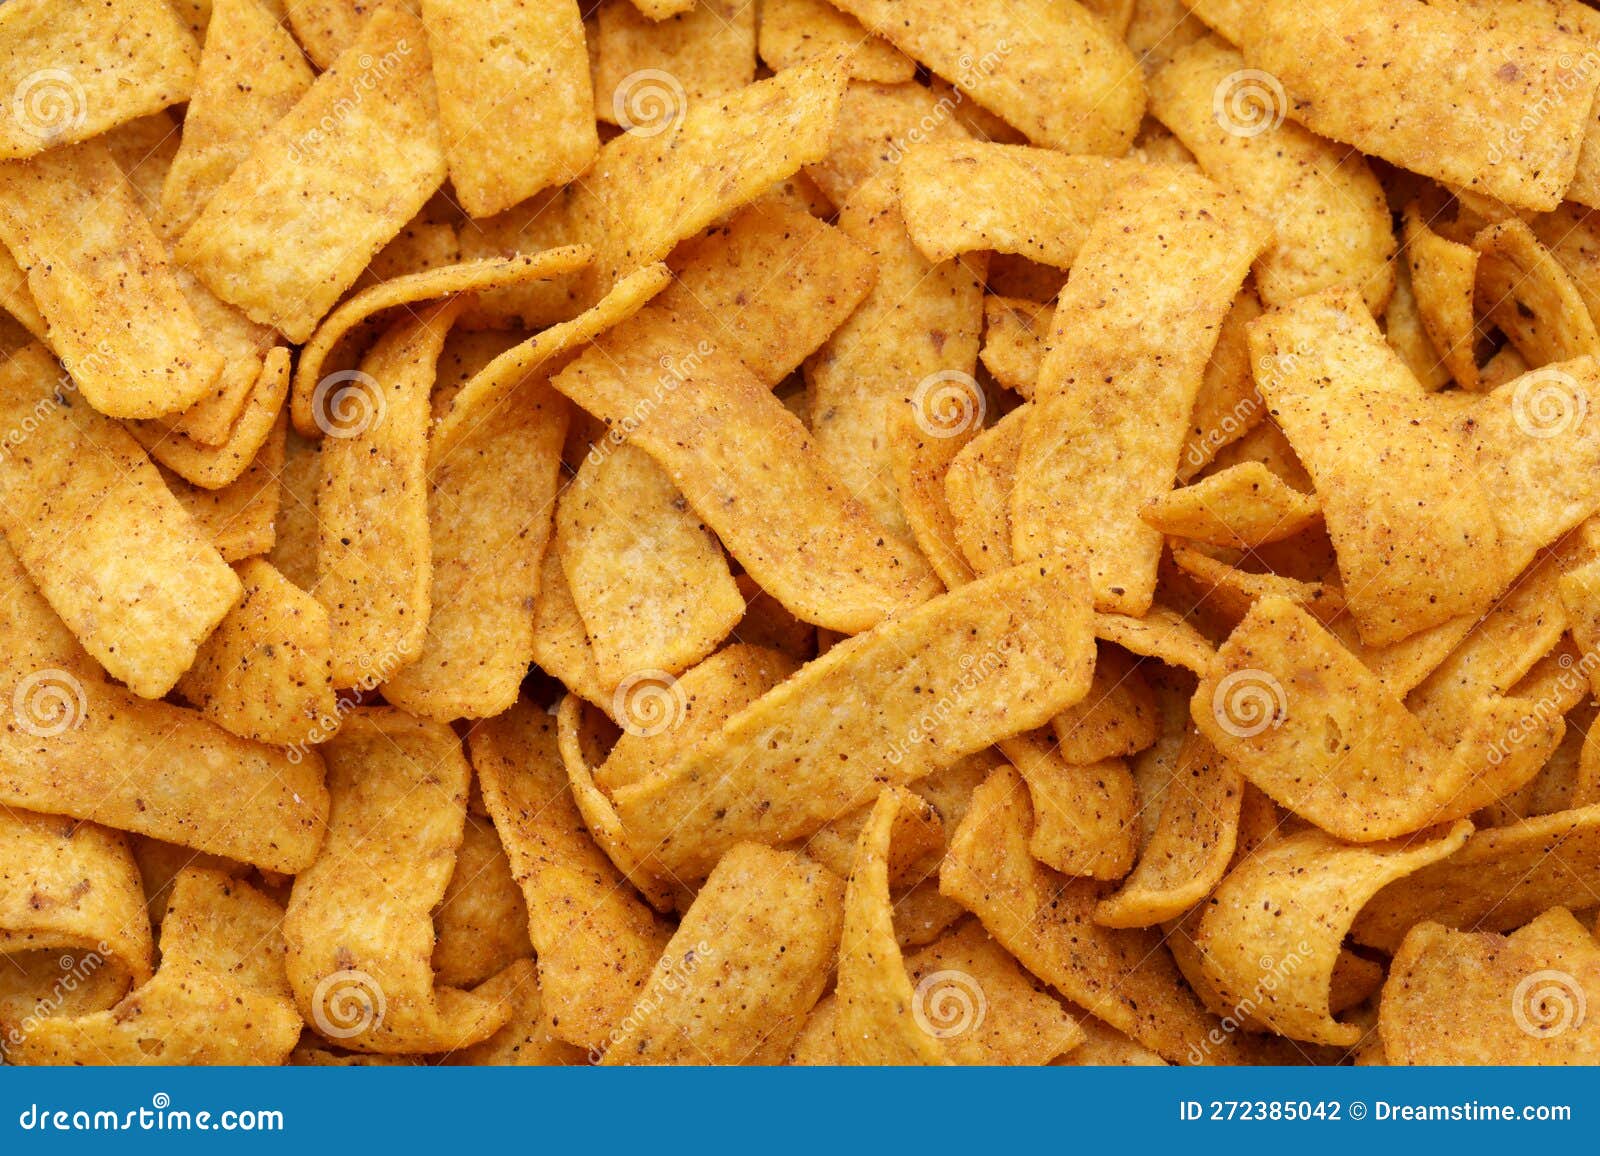 rectangular corn chips for frito pie